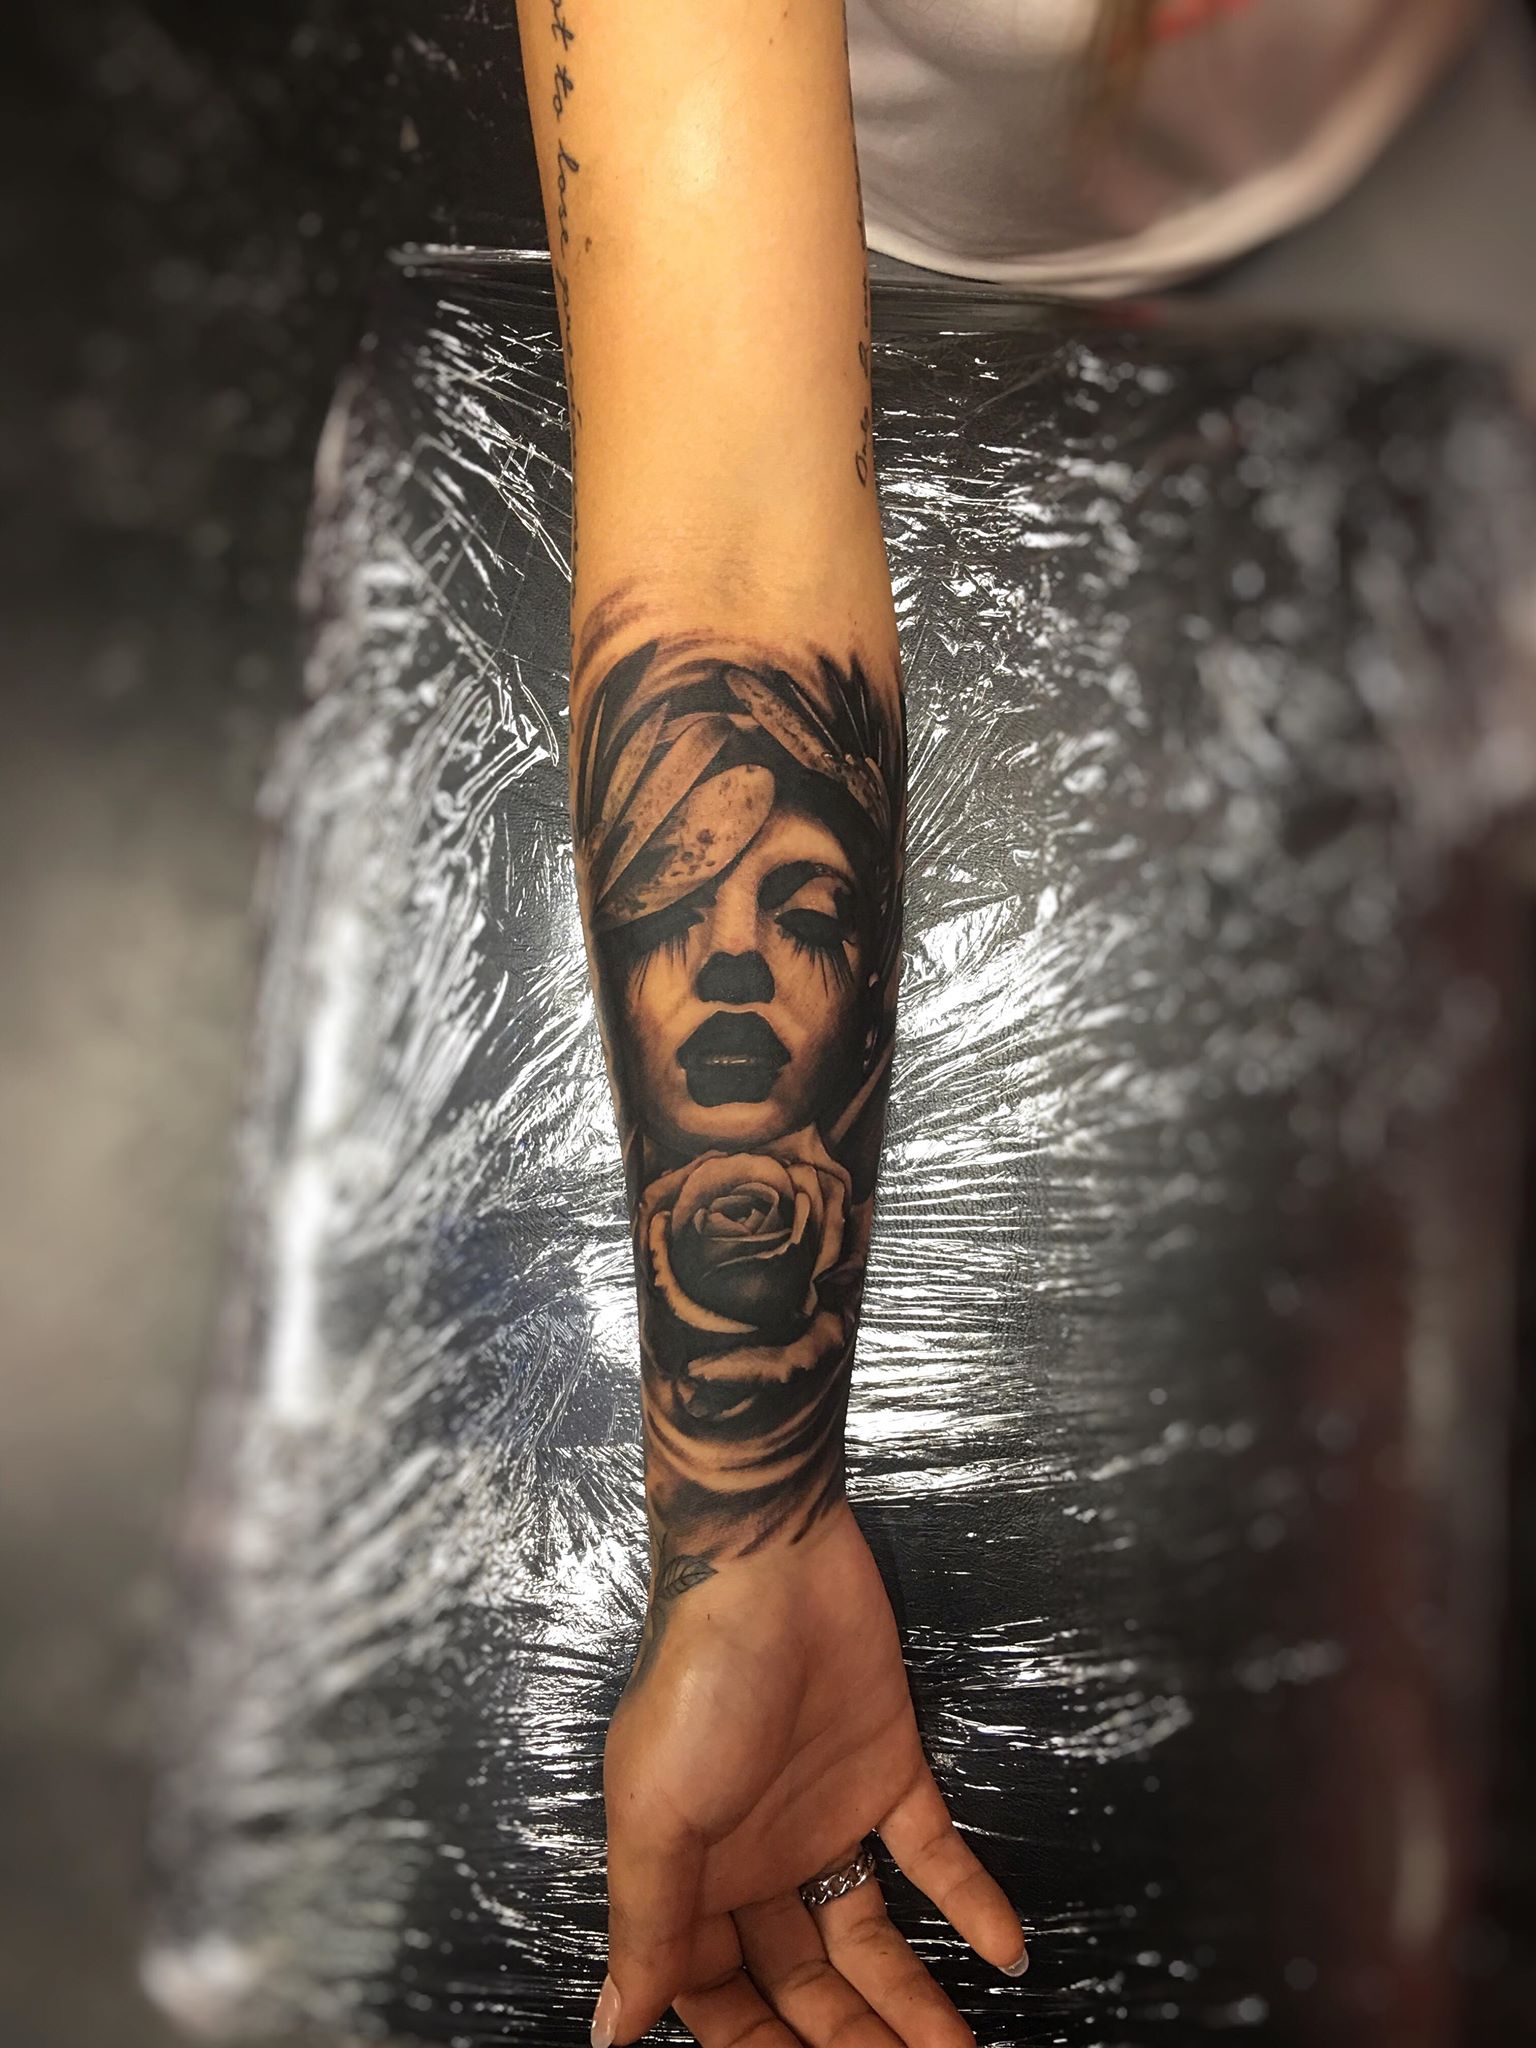 Black and grey realism tattoos by Balaclava Ink Tattoo Artists in Brisbane